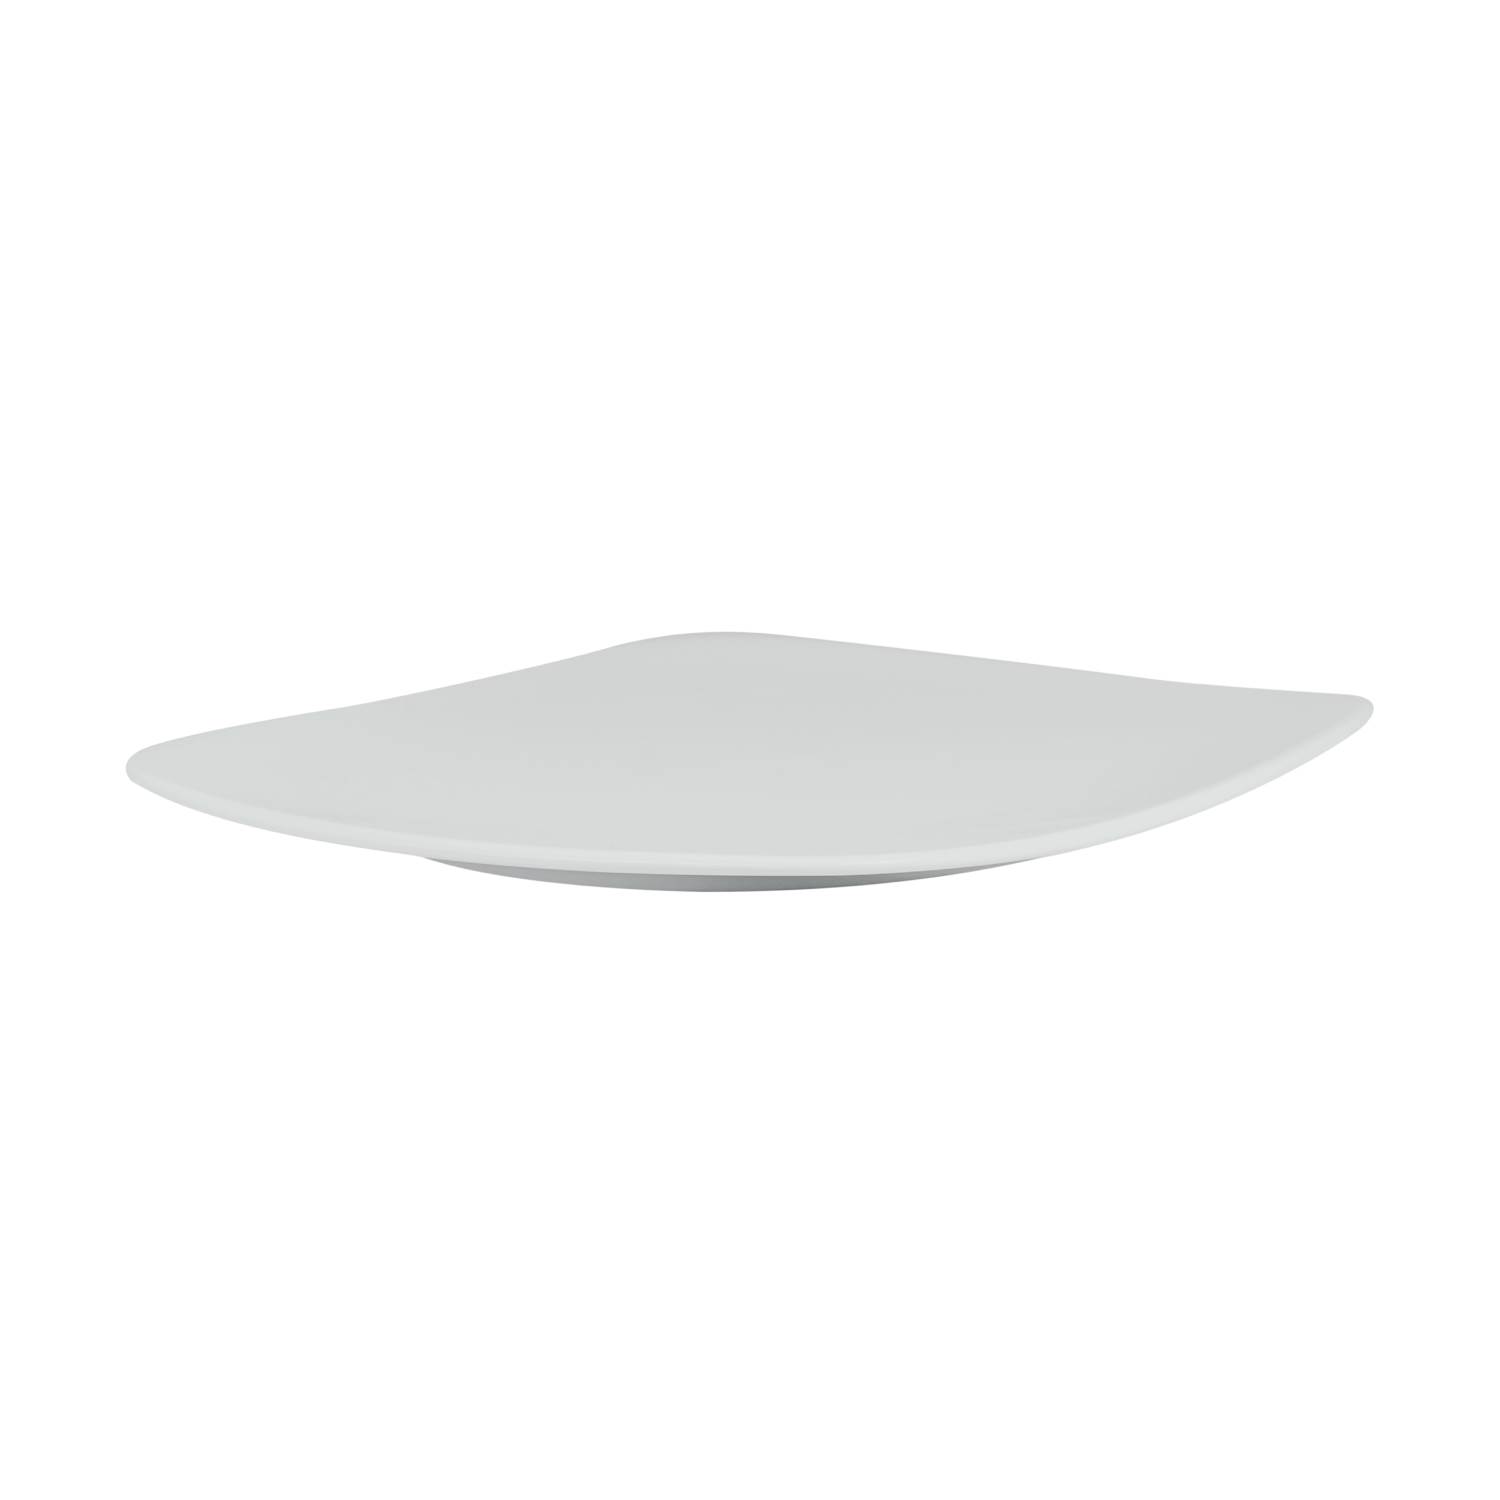 Baralee Simple Plus Square Plate 30 Cm (11 3/4")